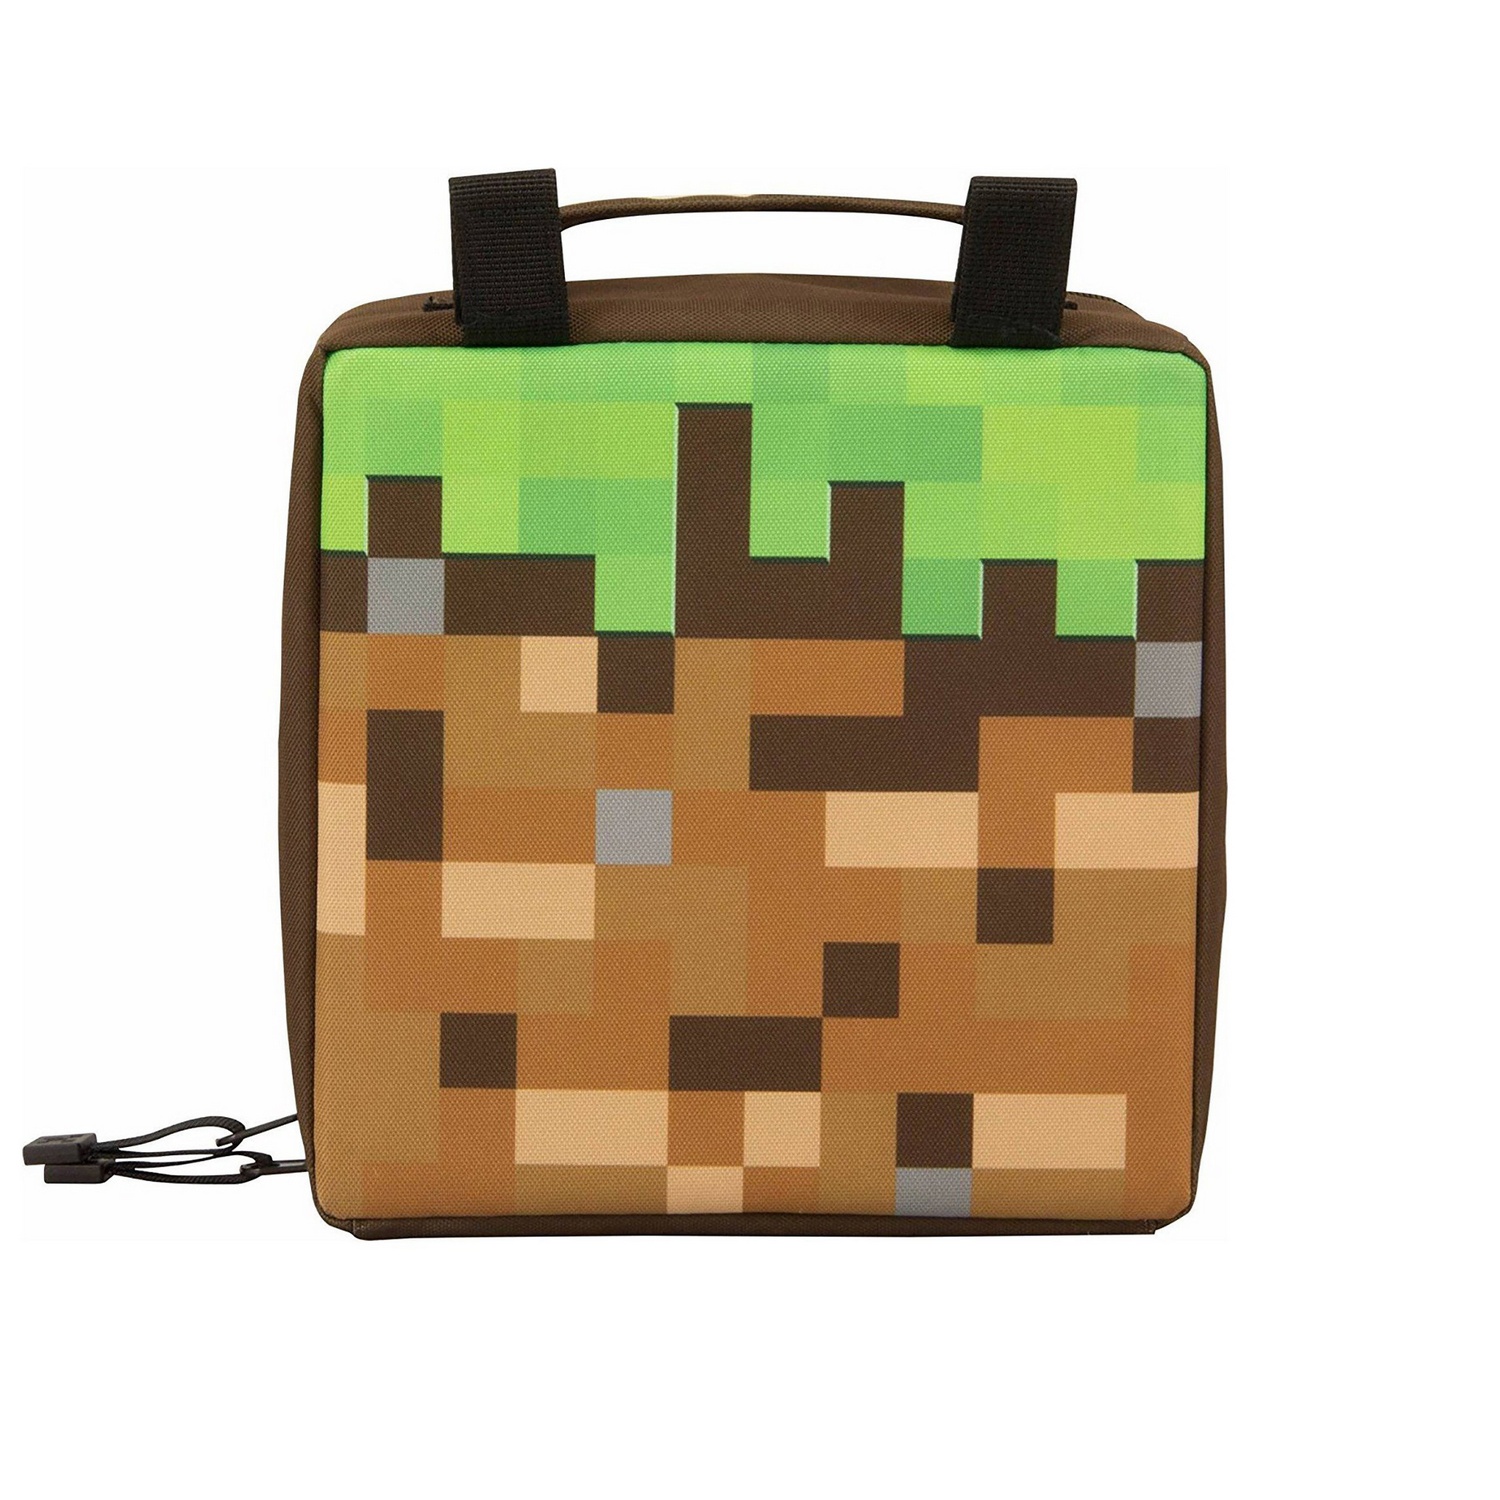 Minecraft - Dirt Block Lunch Box